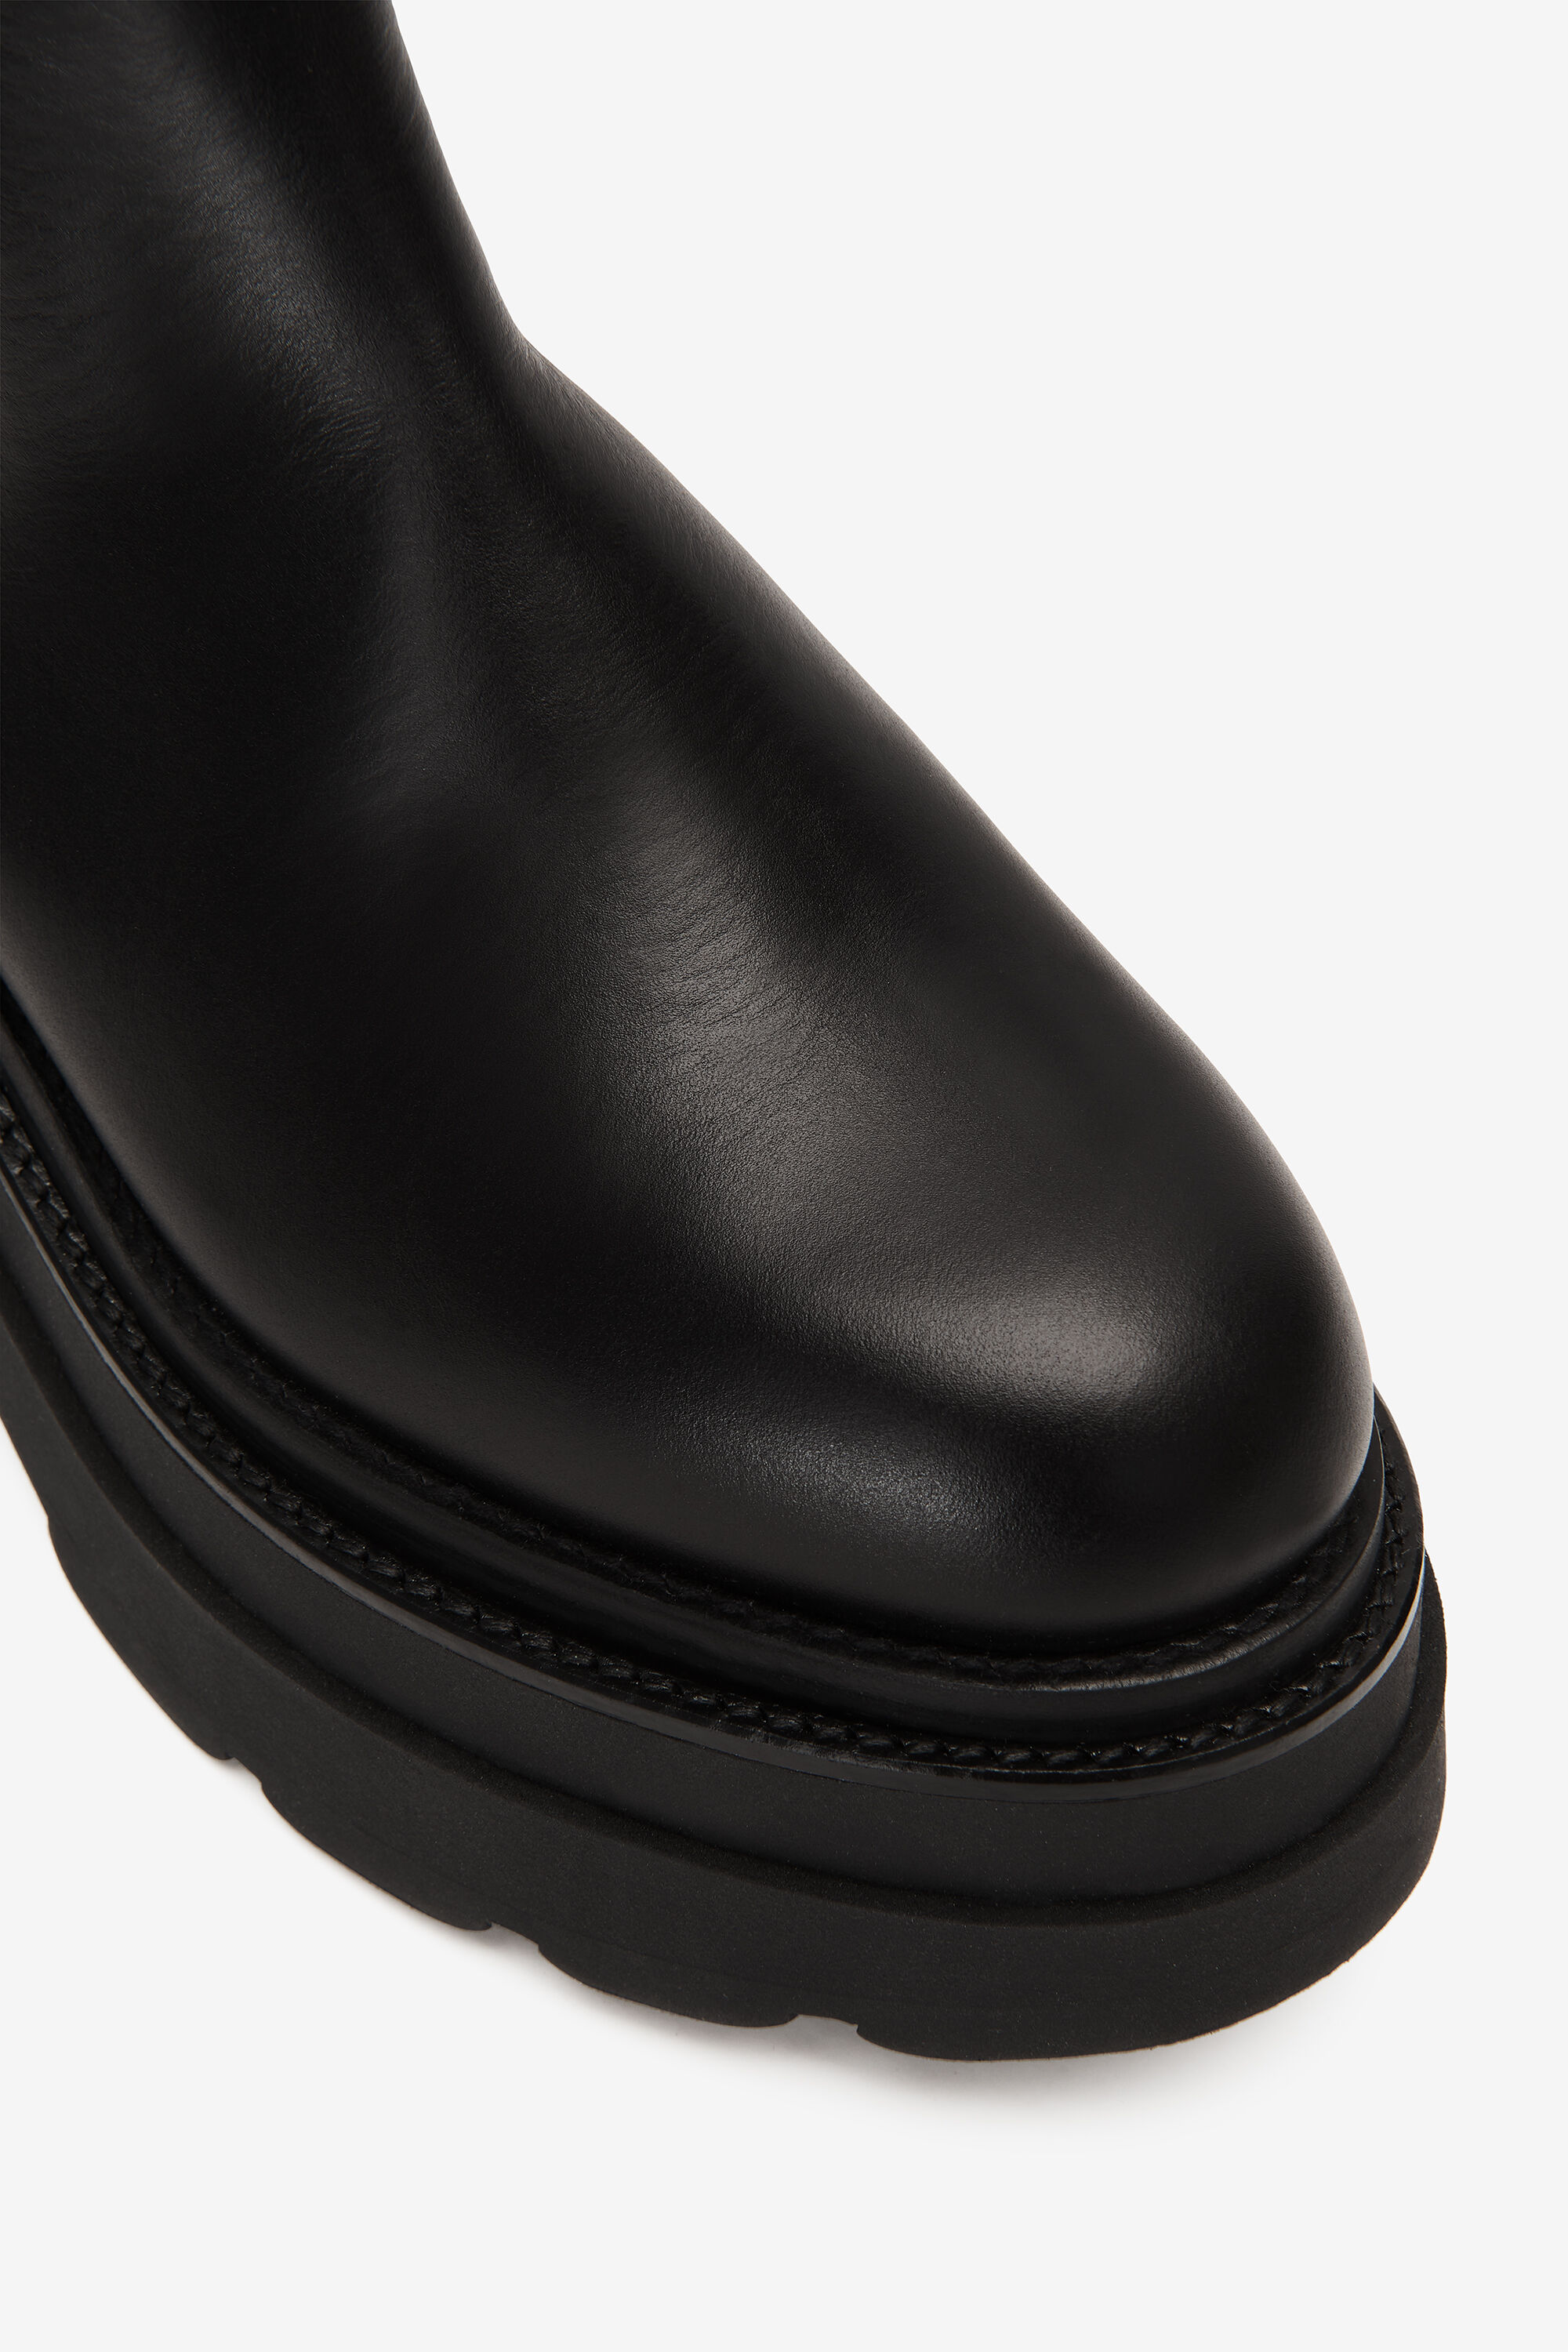 alexanderwang carter platform chelsea boot in leather BLACK